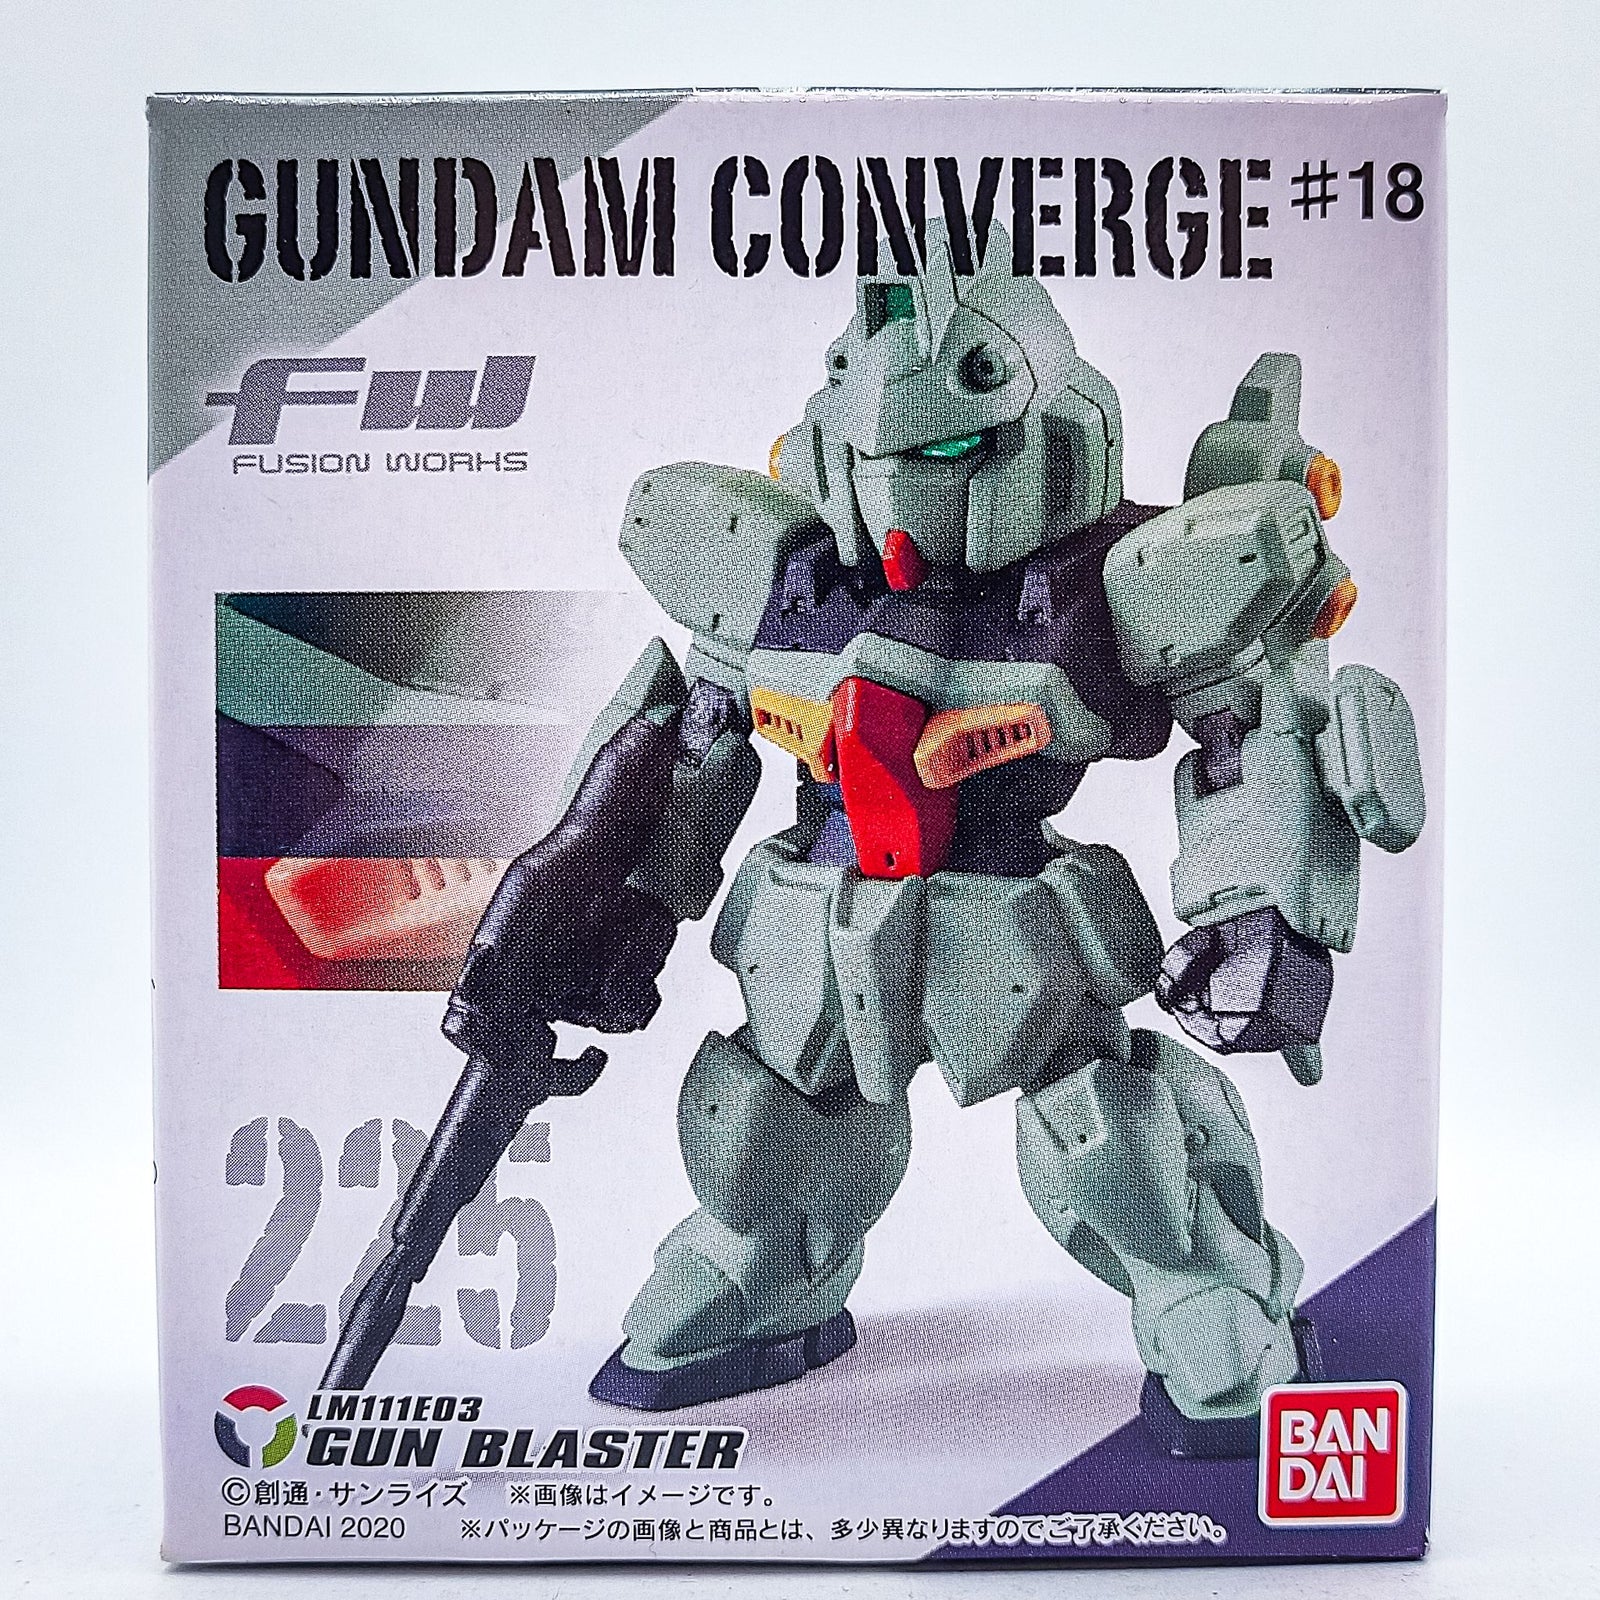 Gundam Converge #225 Gun Blaster by Bandai - 1